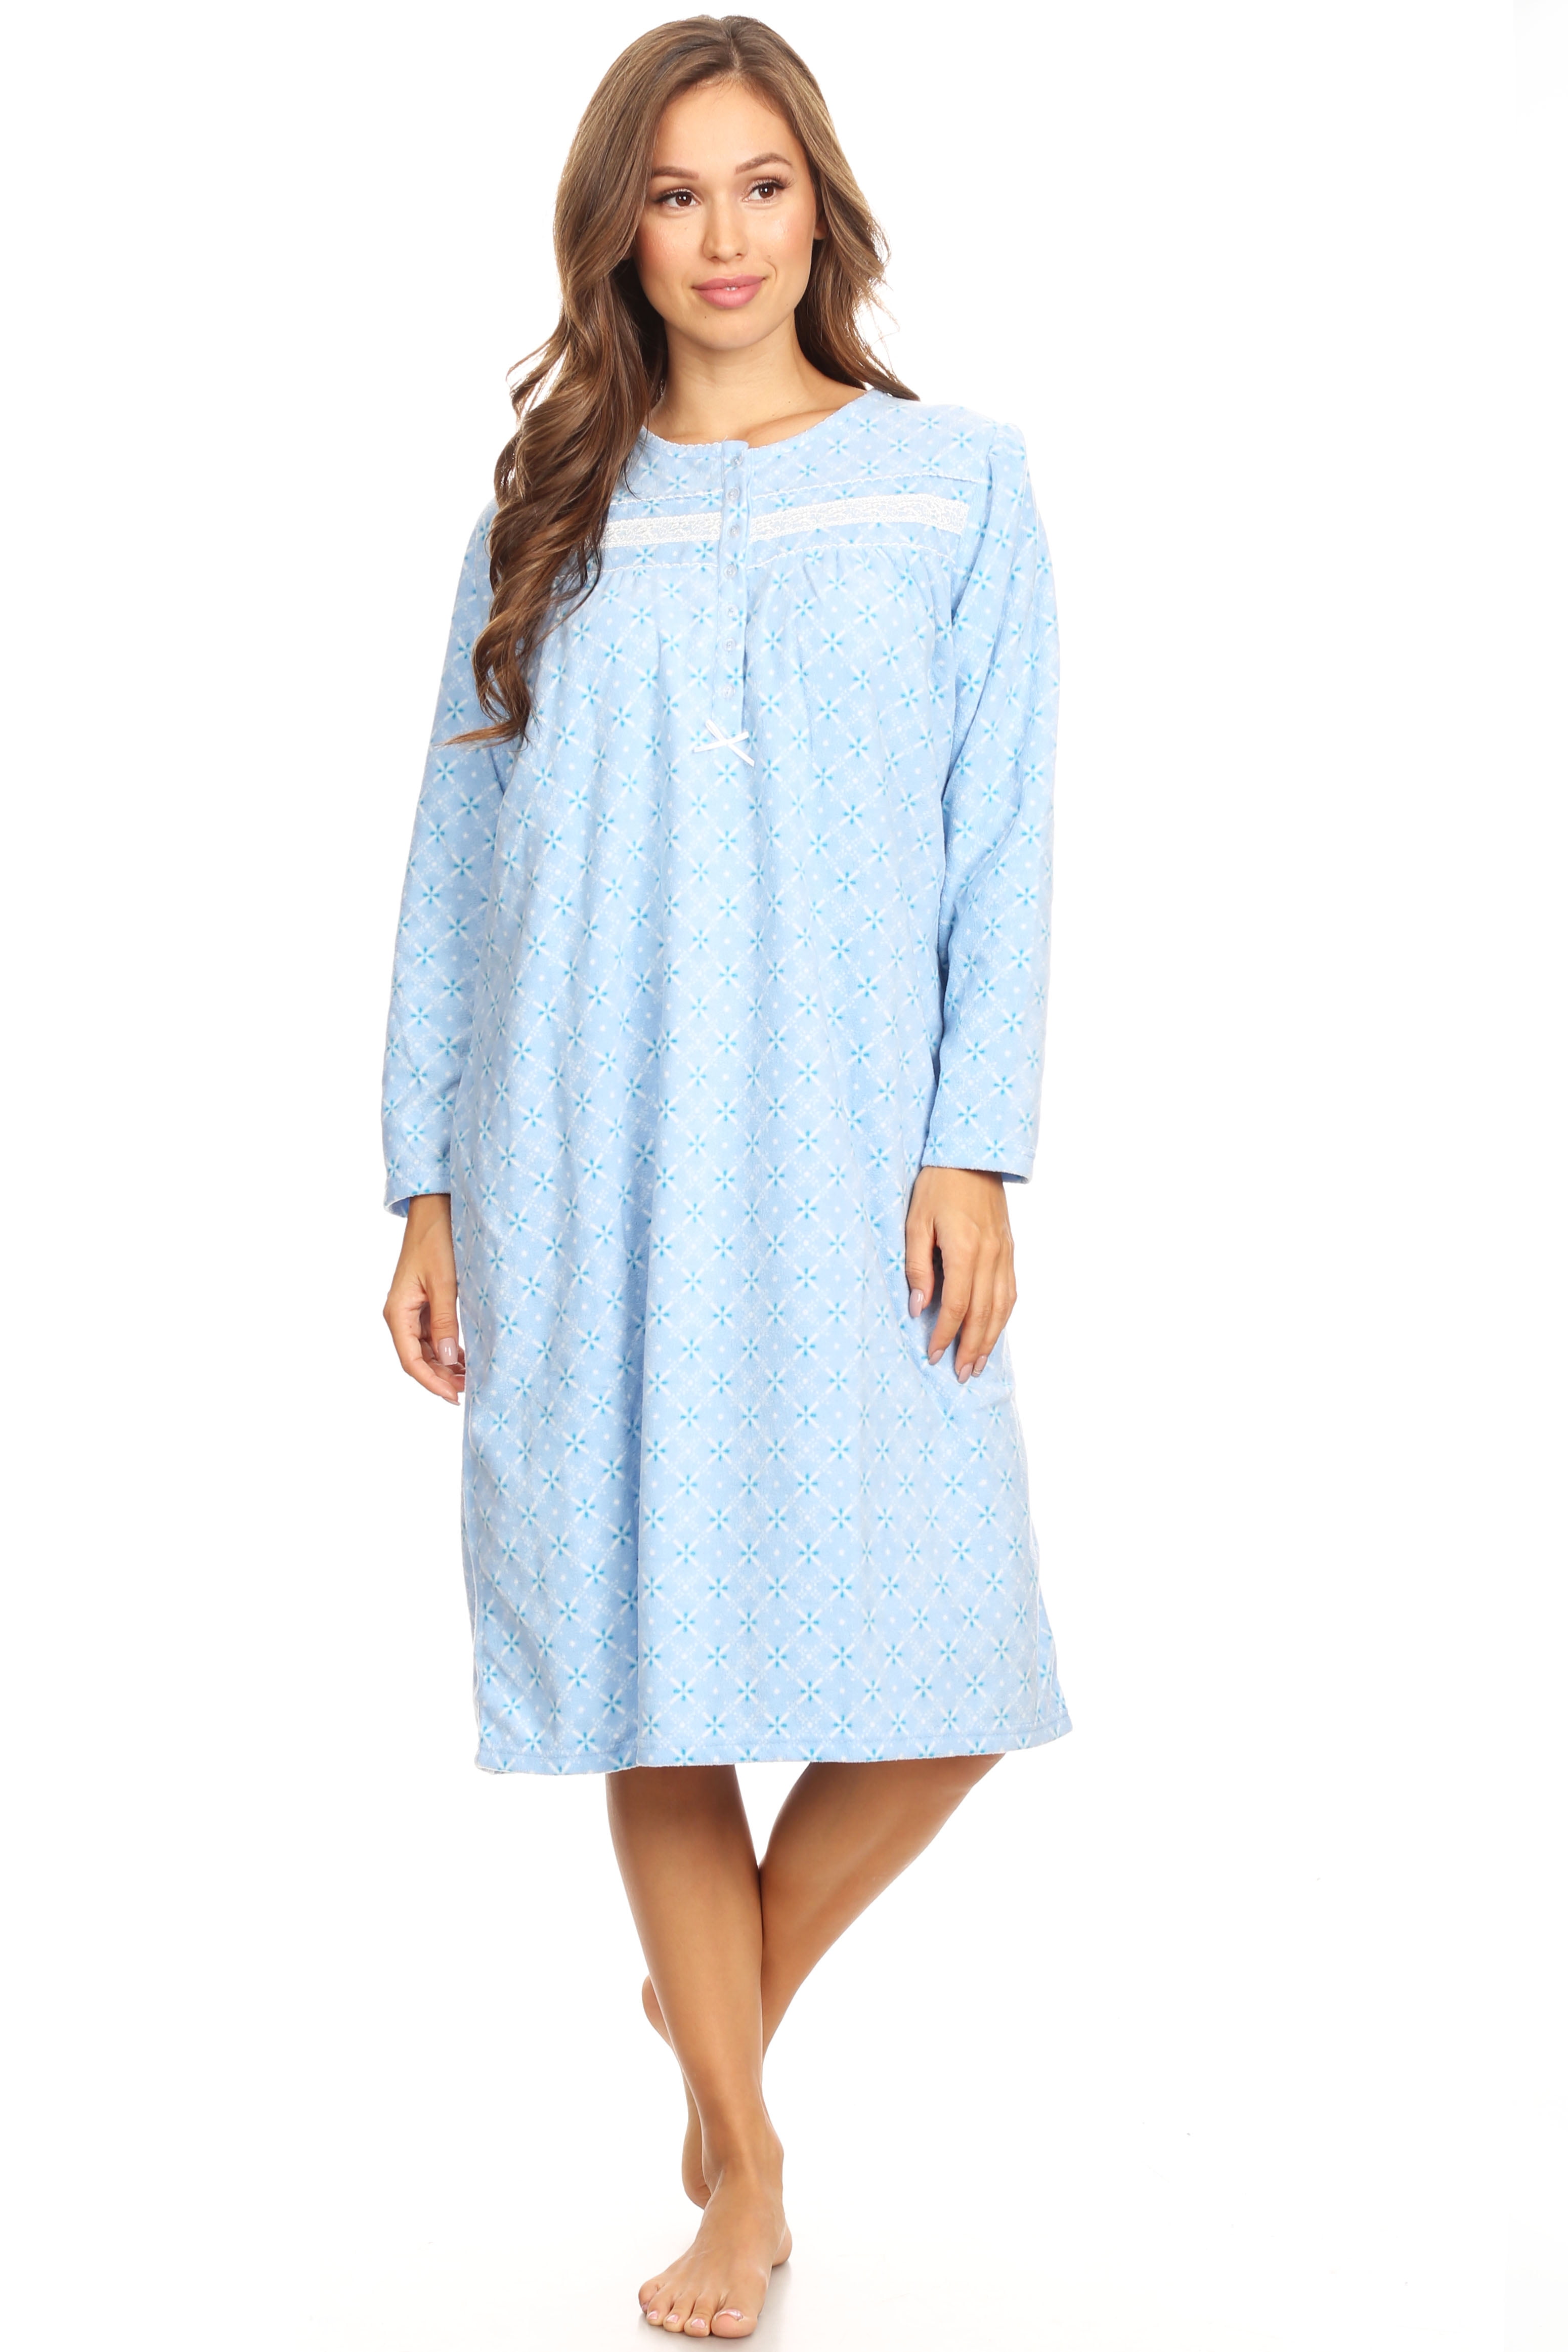 Lati Fashion Fleece Women Nightgown Sleepwear Pajamas Female Long